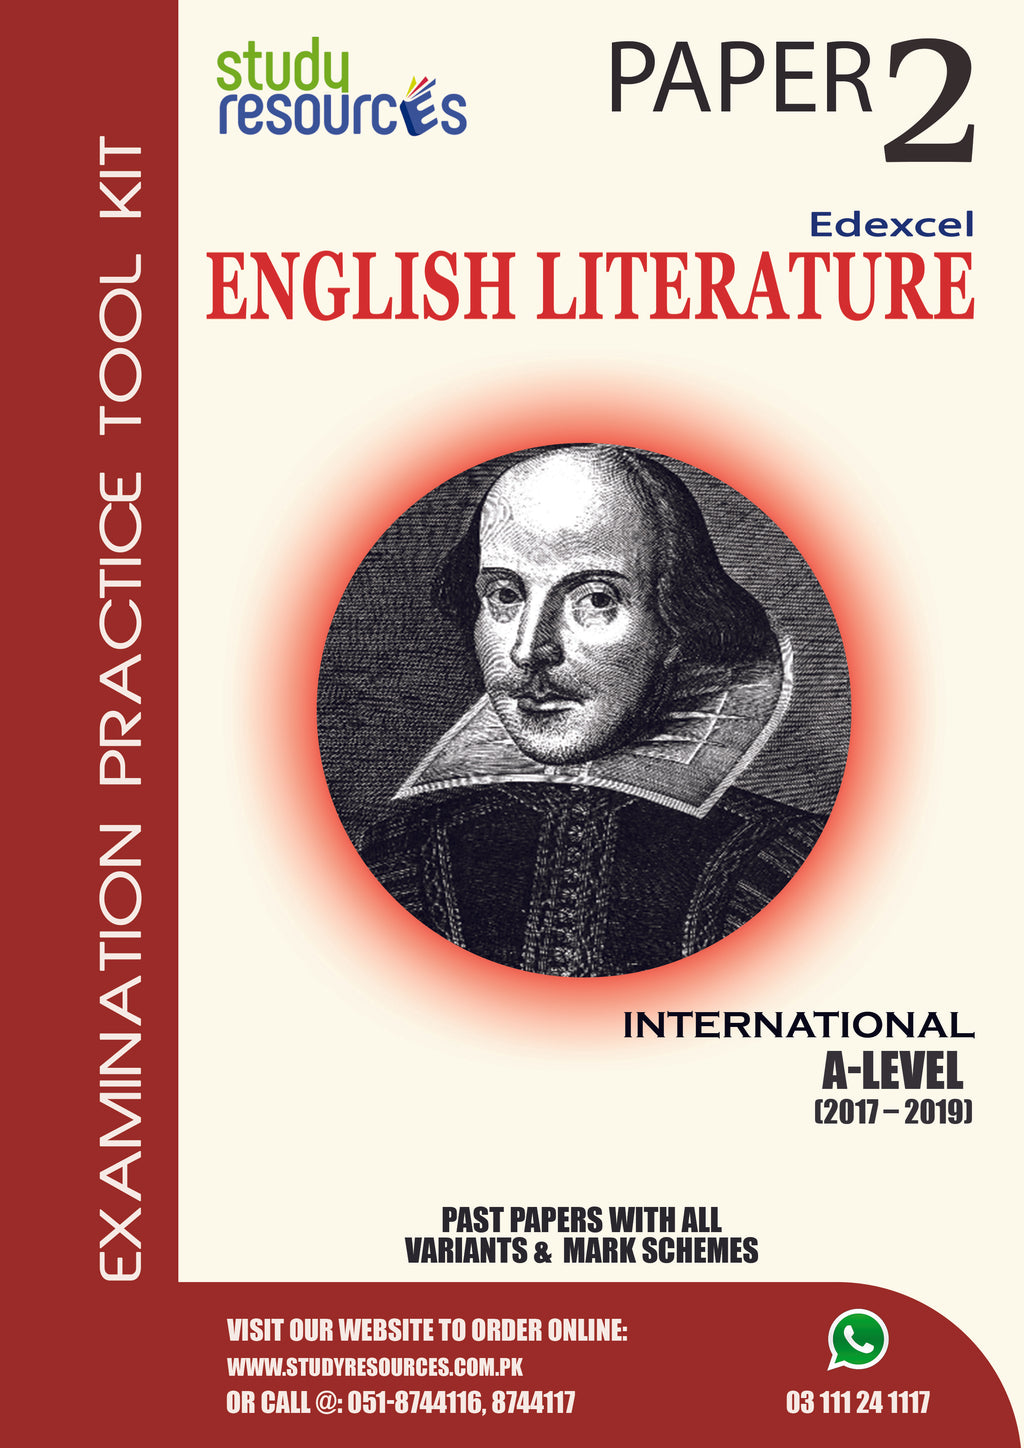 Edexcel A-Level English Literature P-2 Past Papers (2017-2019)